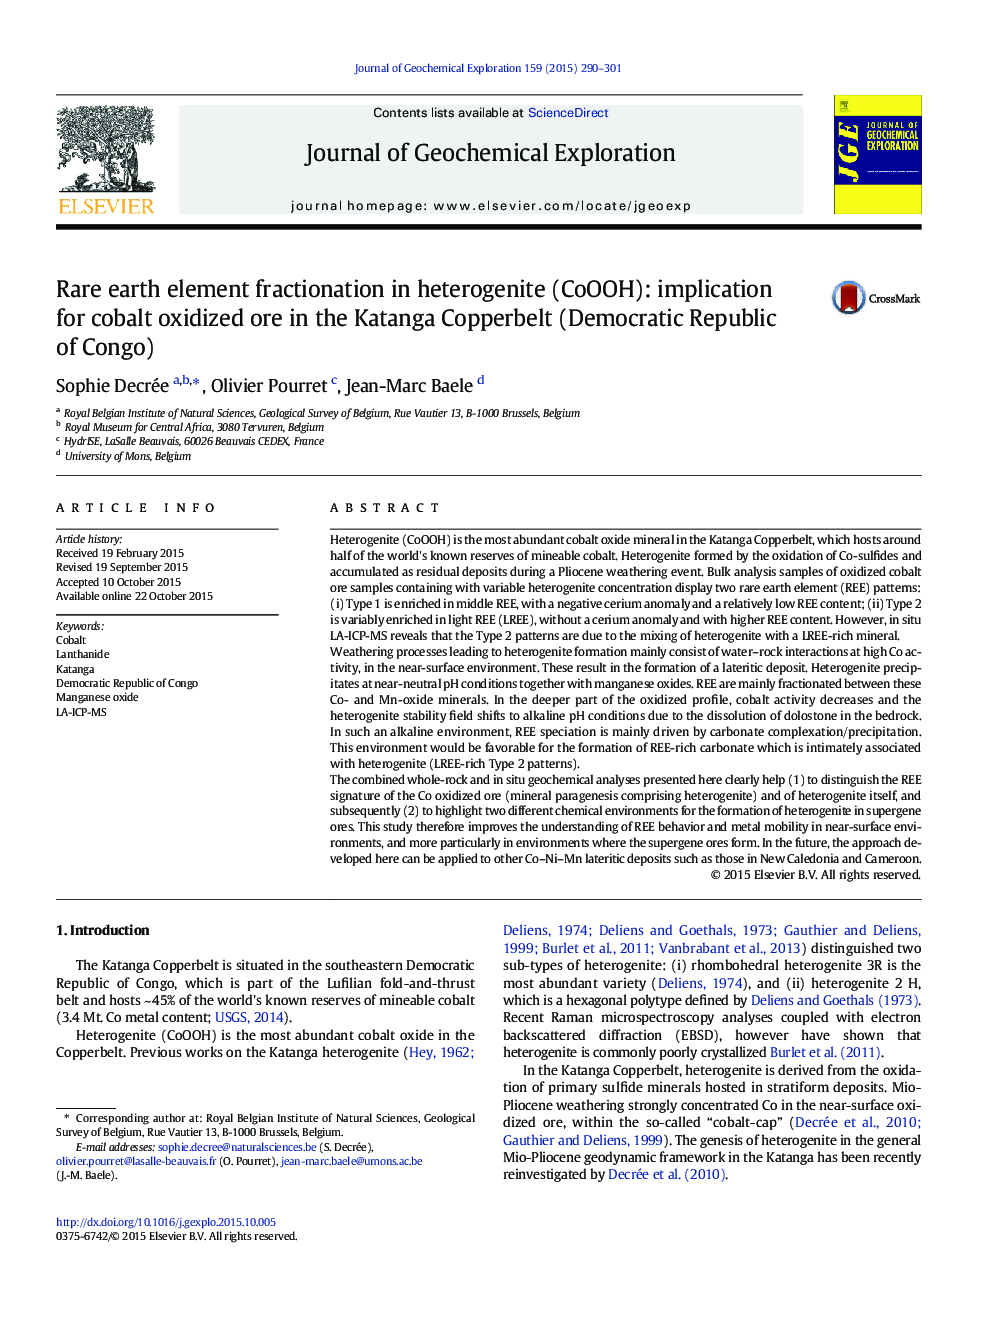 Rare earth element fractionation in heterogenite (CoOOH): implication for cobalt oxidized ore in the Katanga Copperbelt (Democratic Republic of Congo)